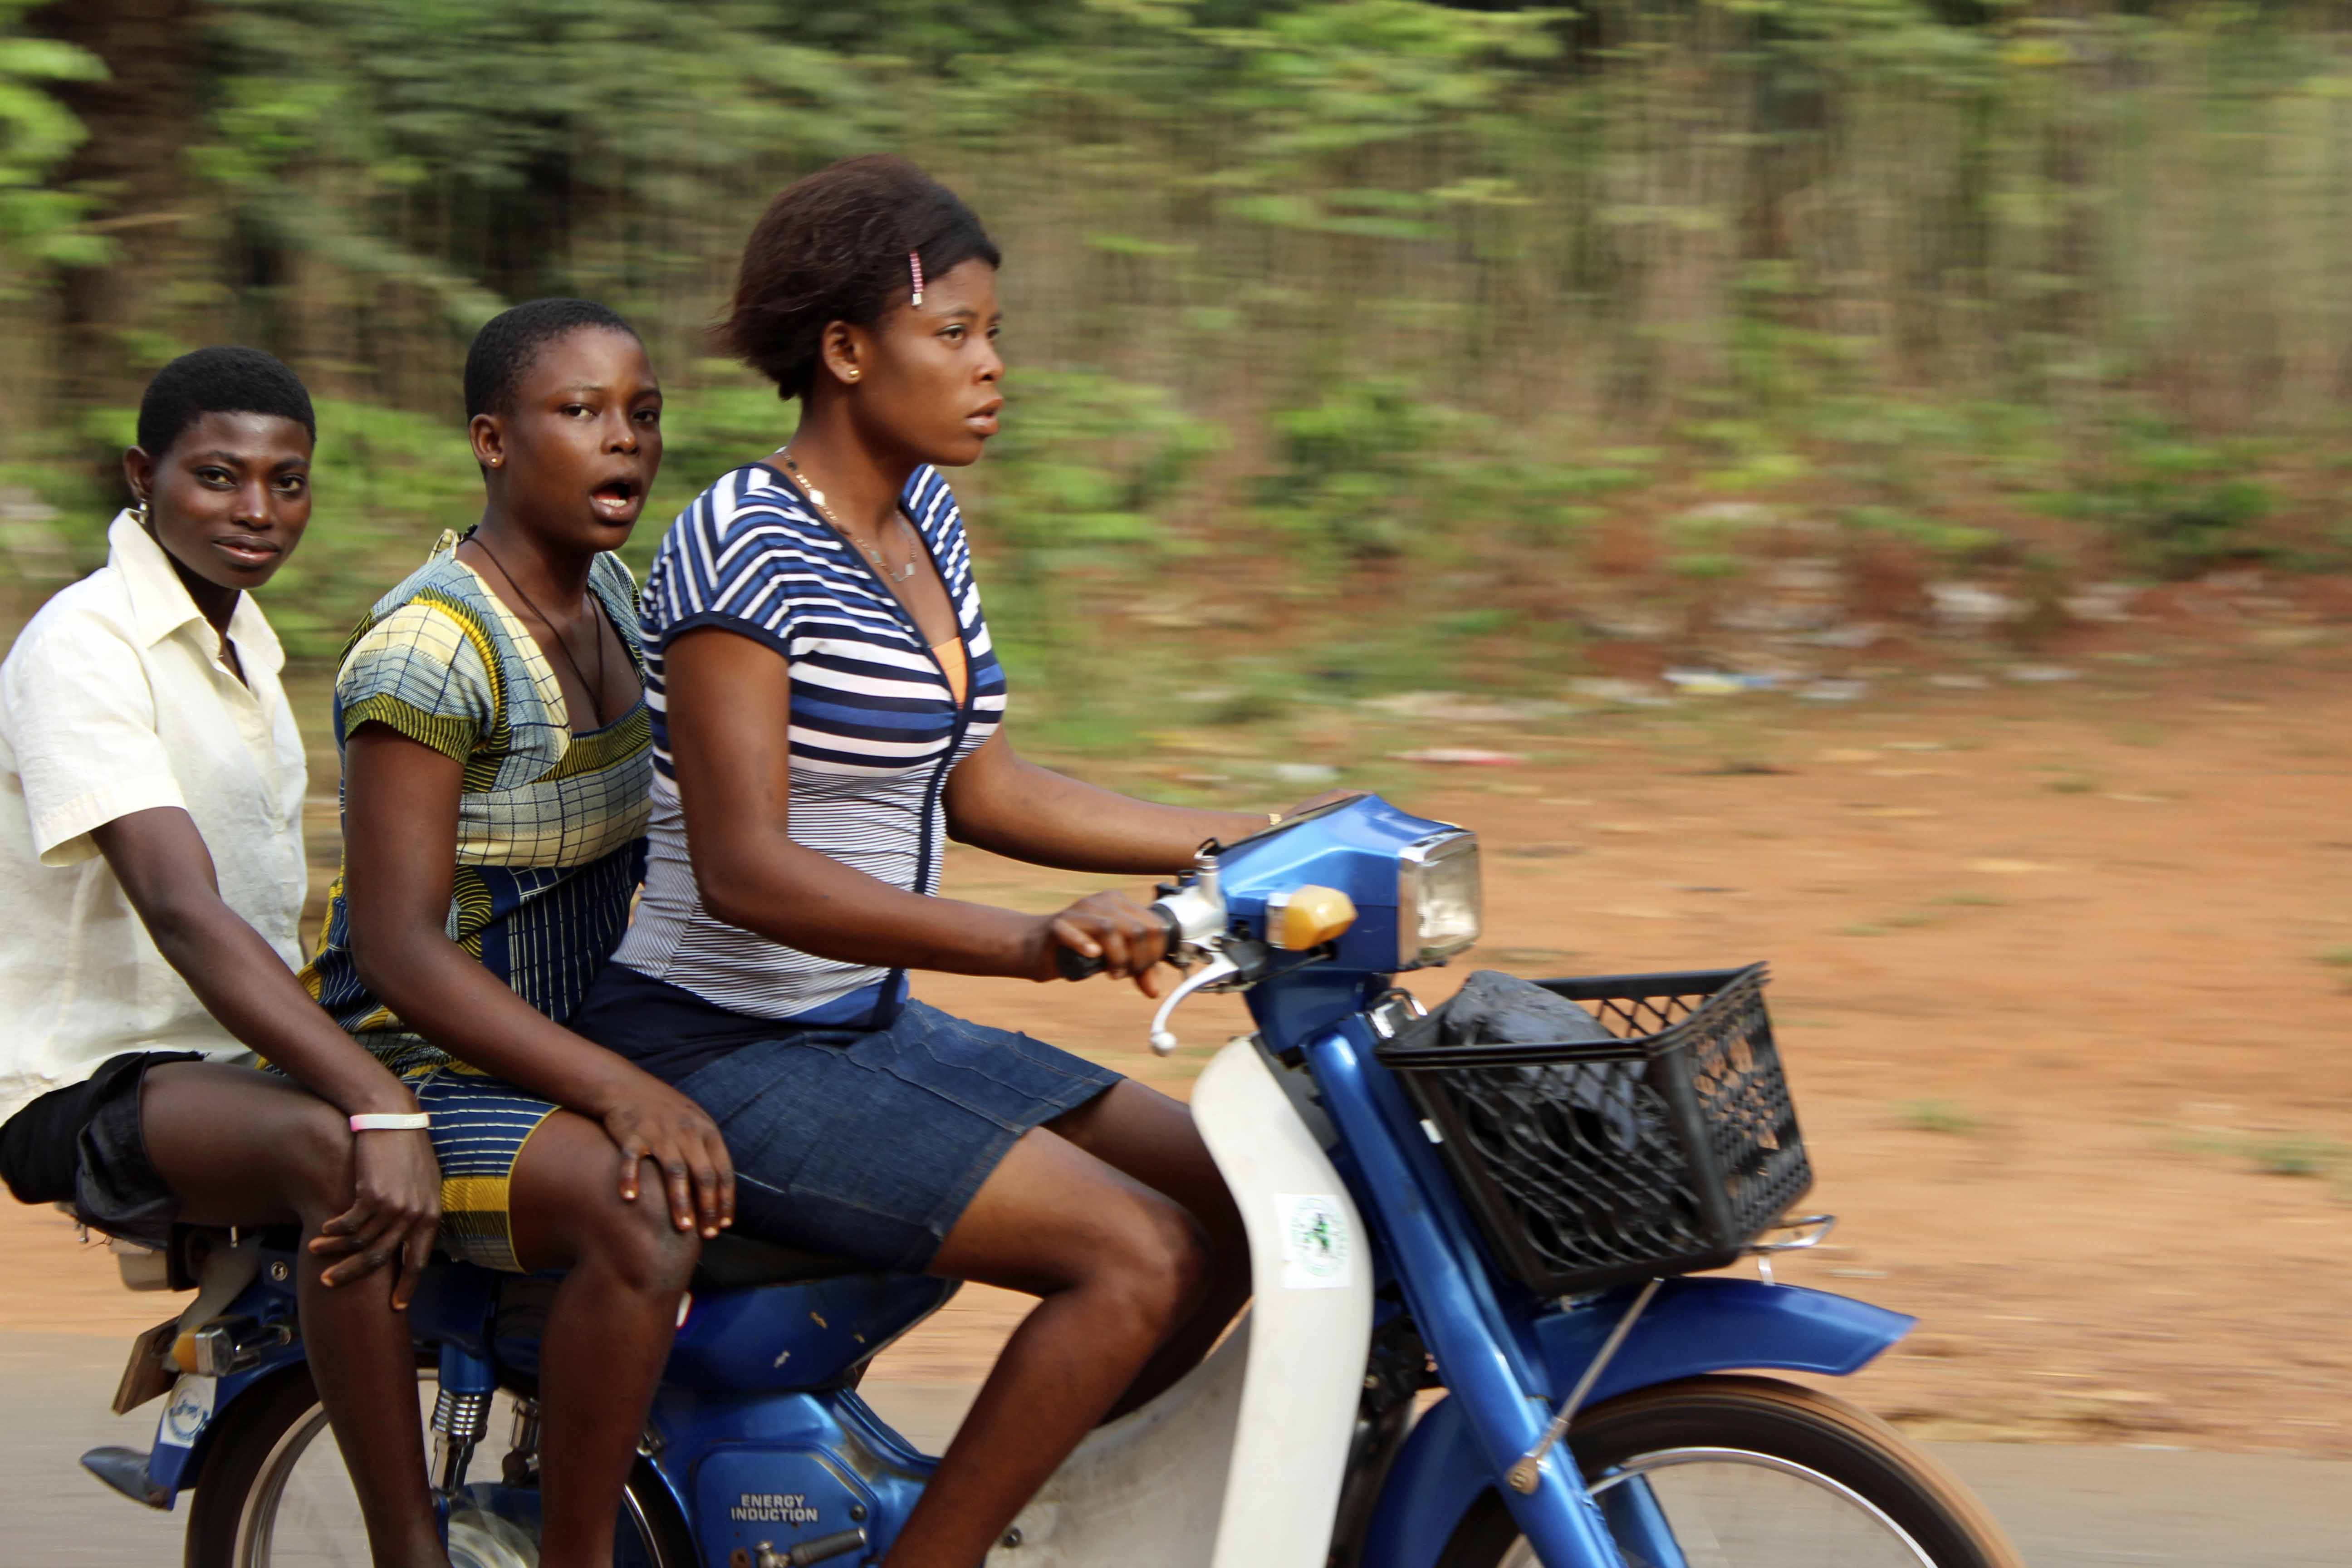 Igbo girls motorcycling in Obolo Village, Enugu State, Nigeria. #JujuFilms